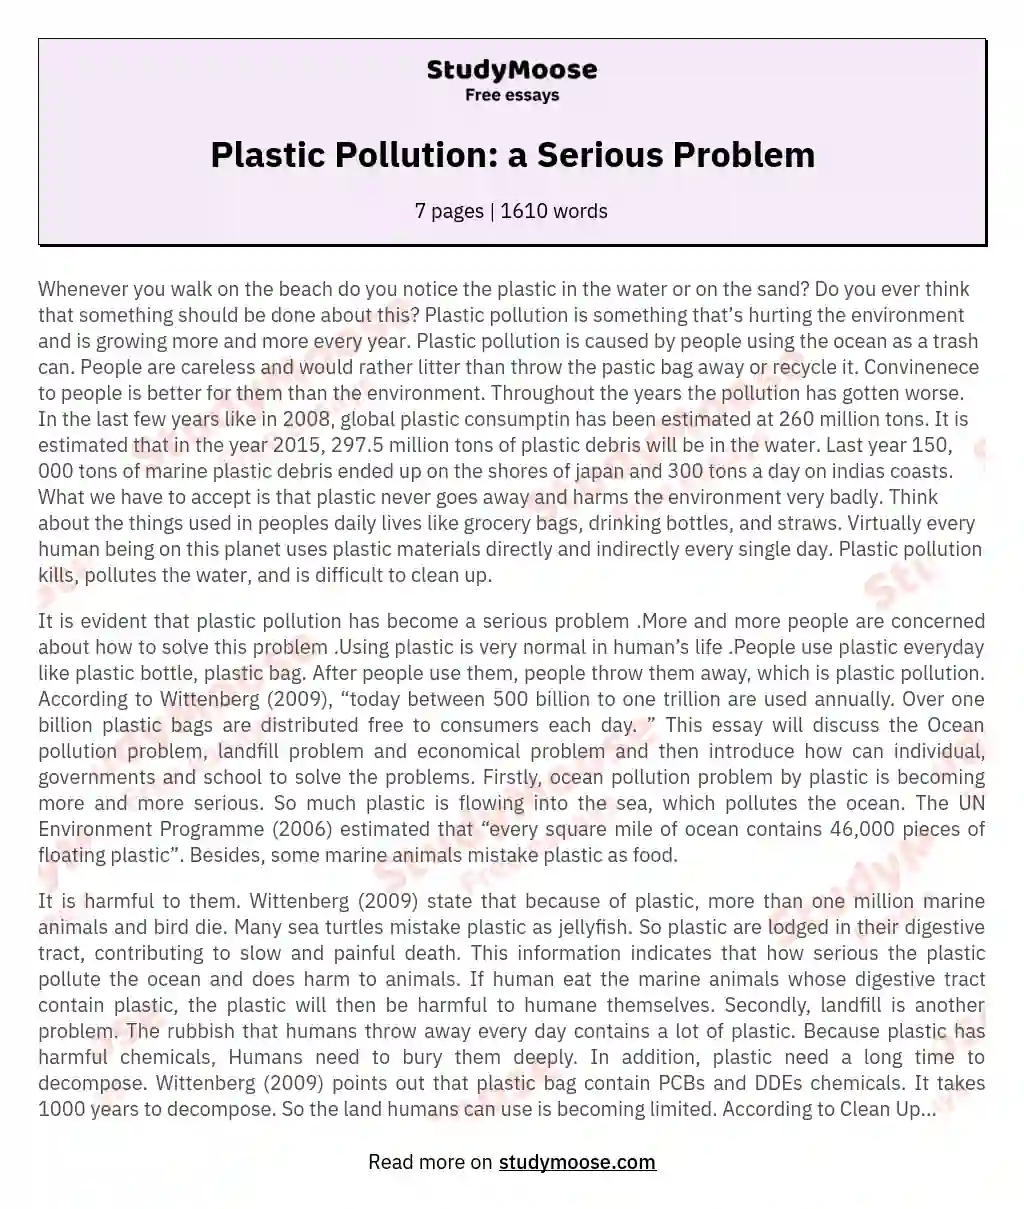 Plastic Pollution: a Serious Problem